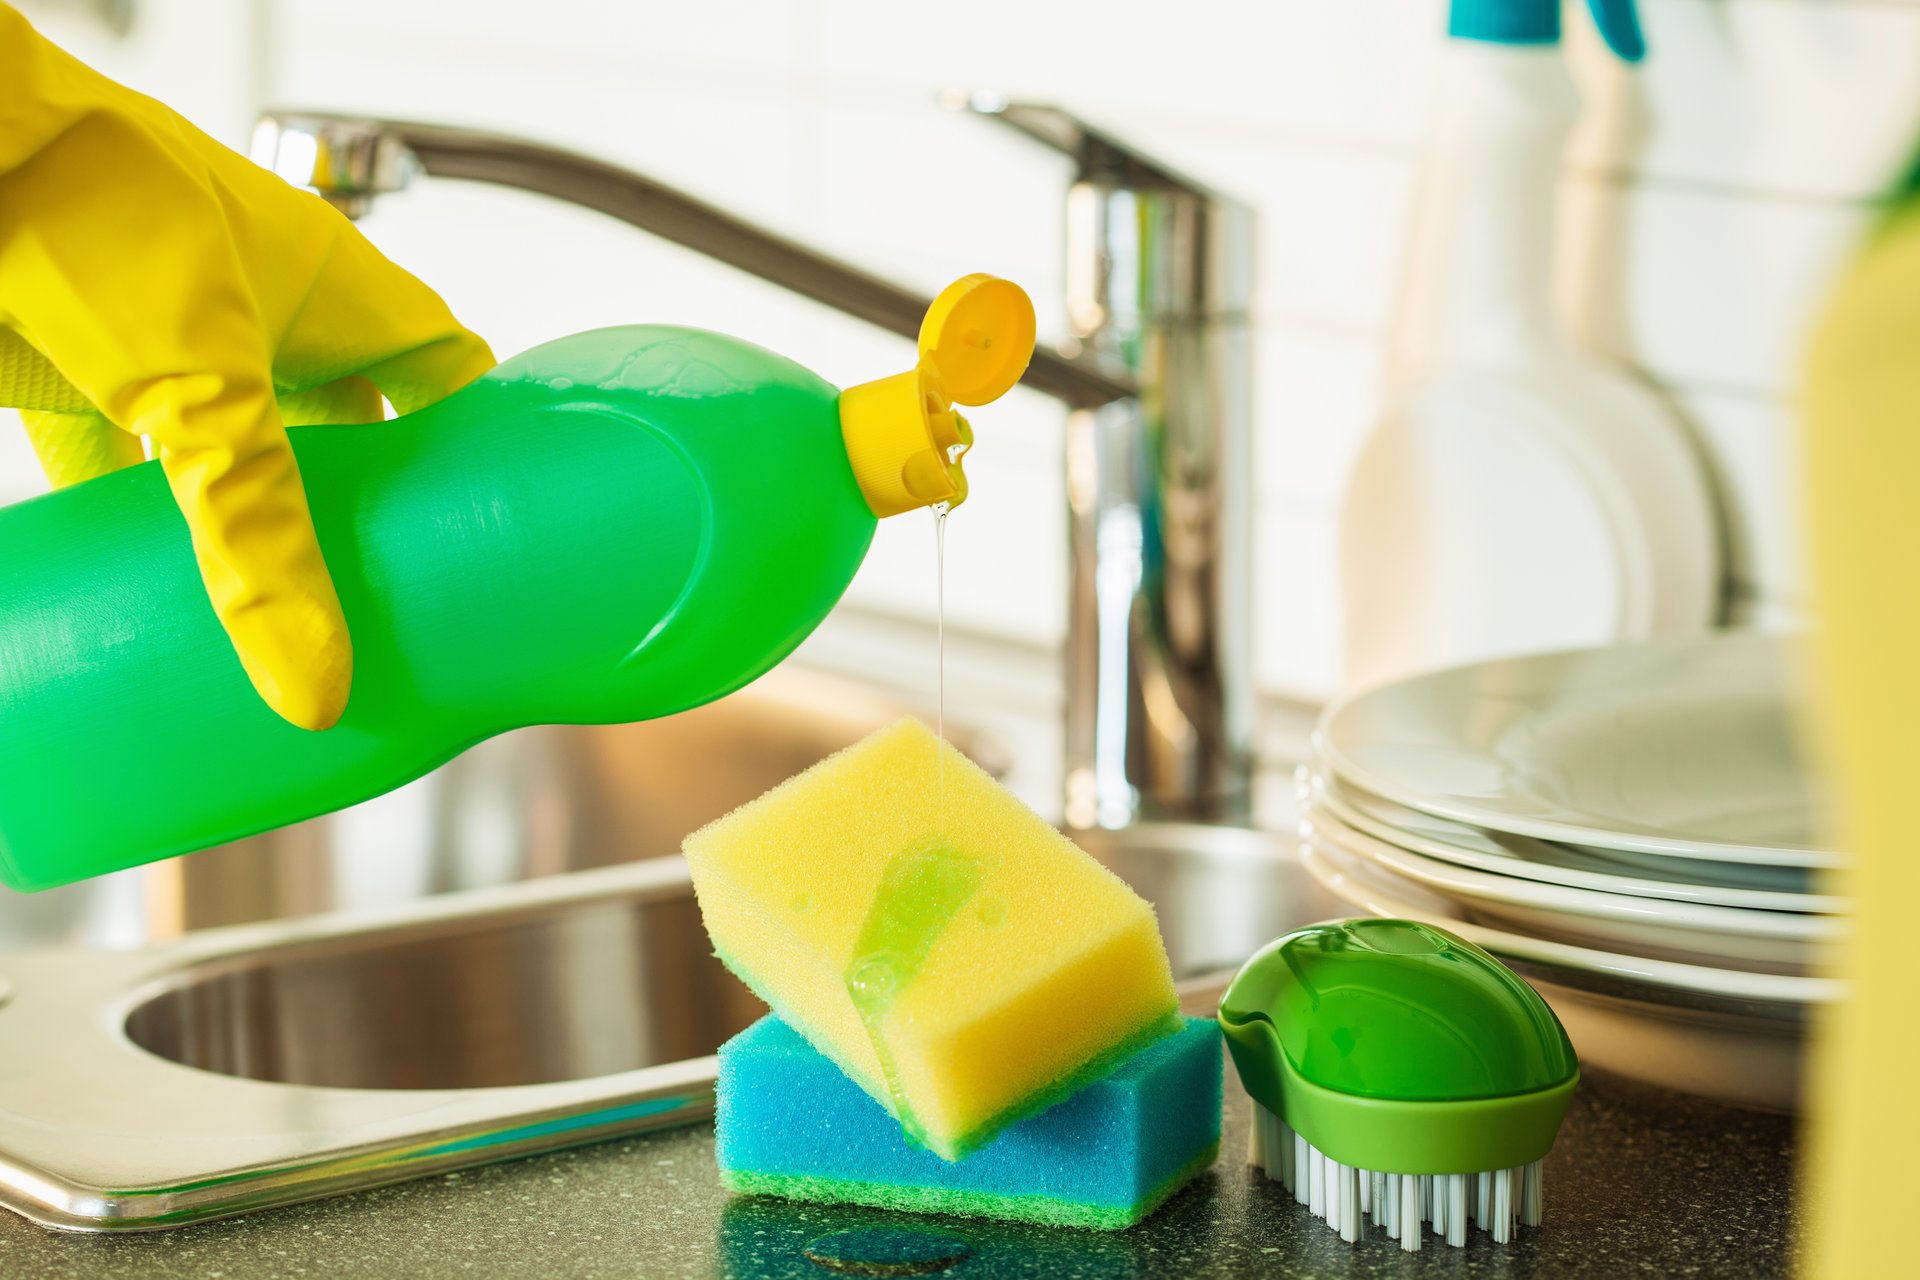 dish soap dispencer for kitchen sink